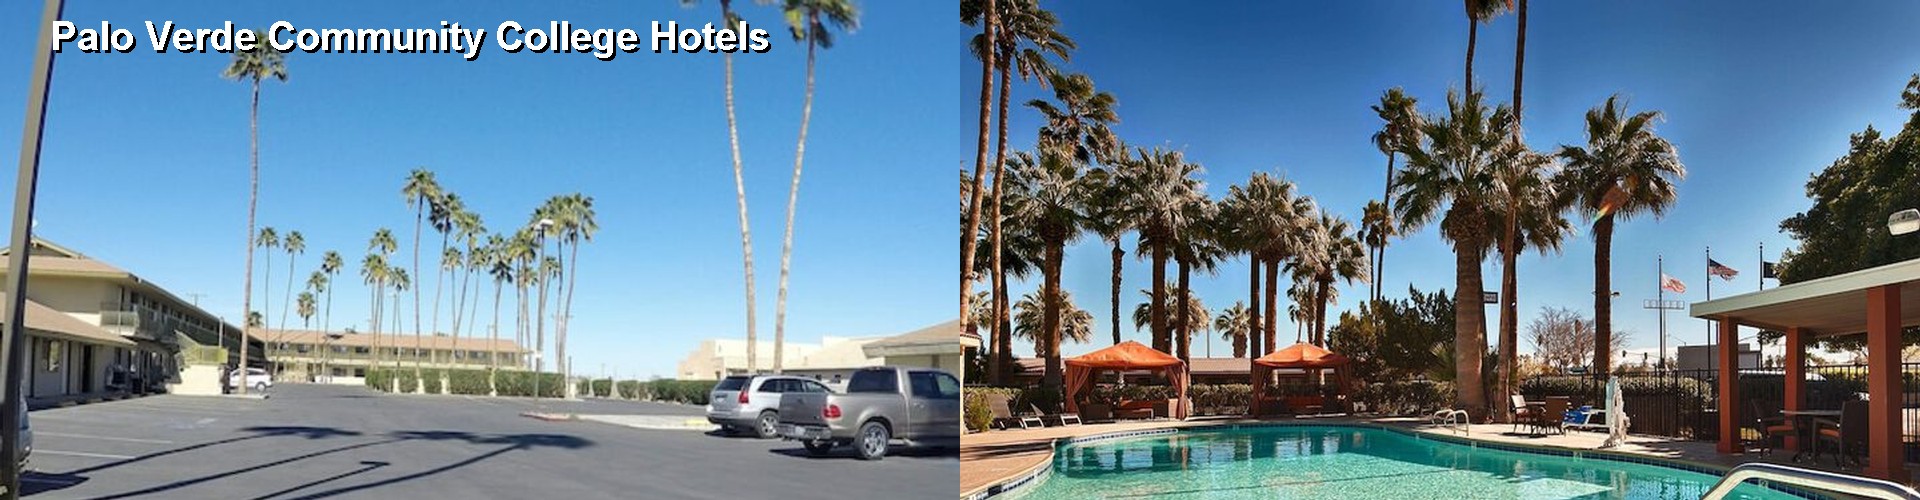 4 Best Hotels near Palo Verde Community College